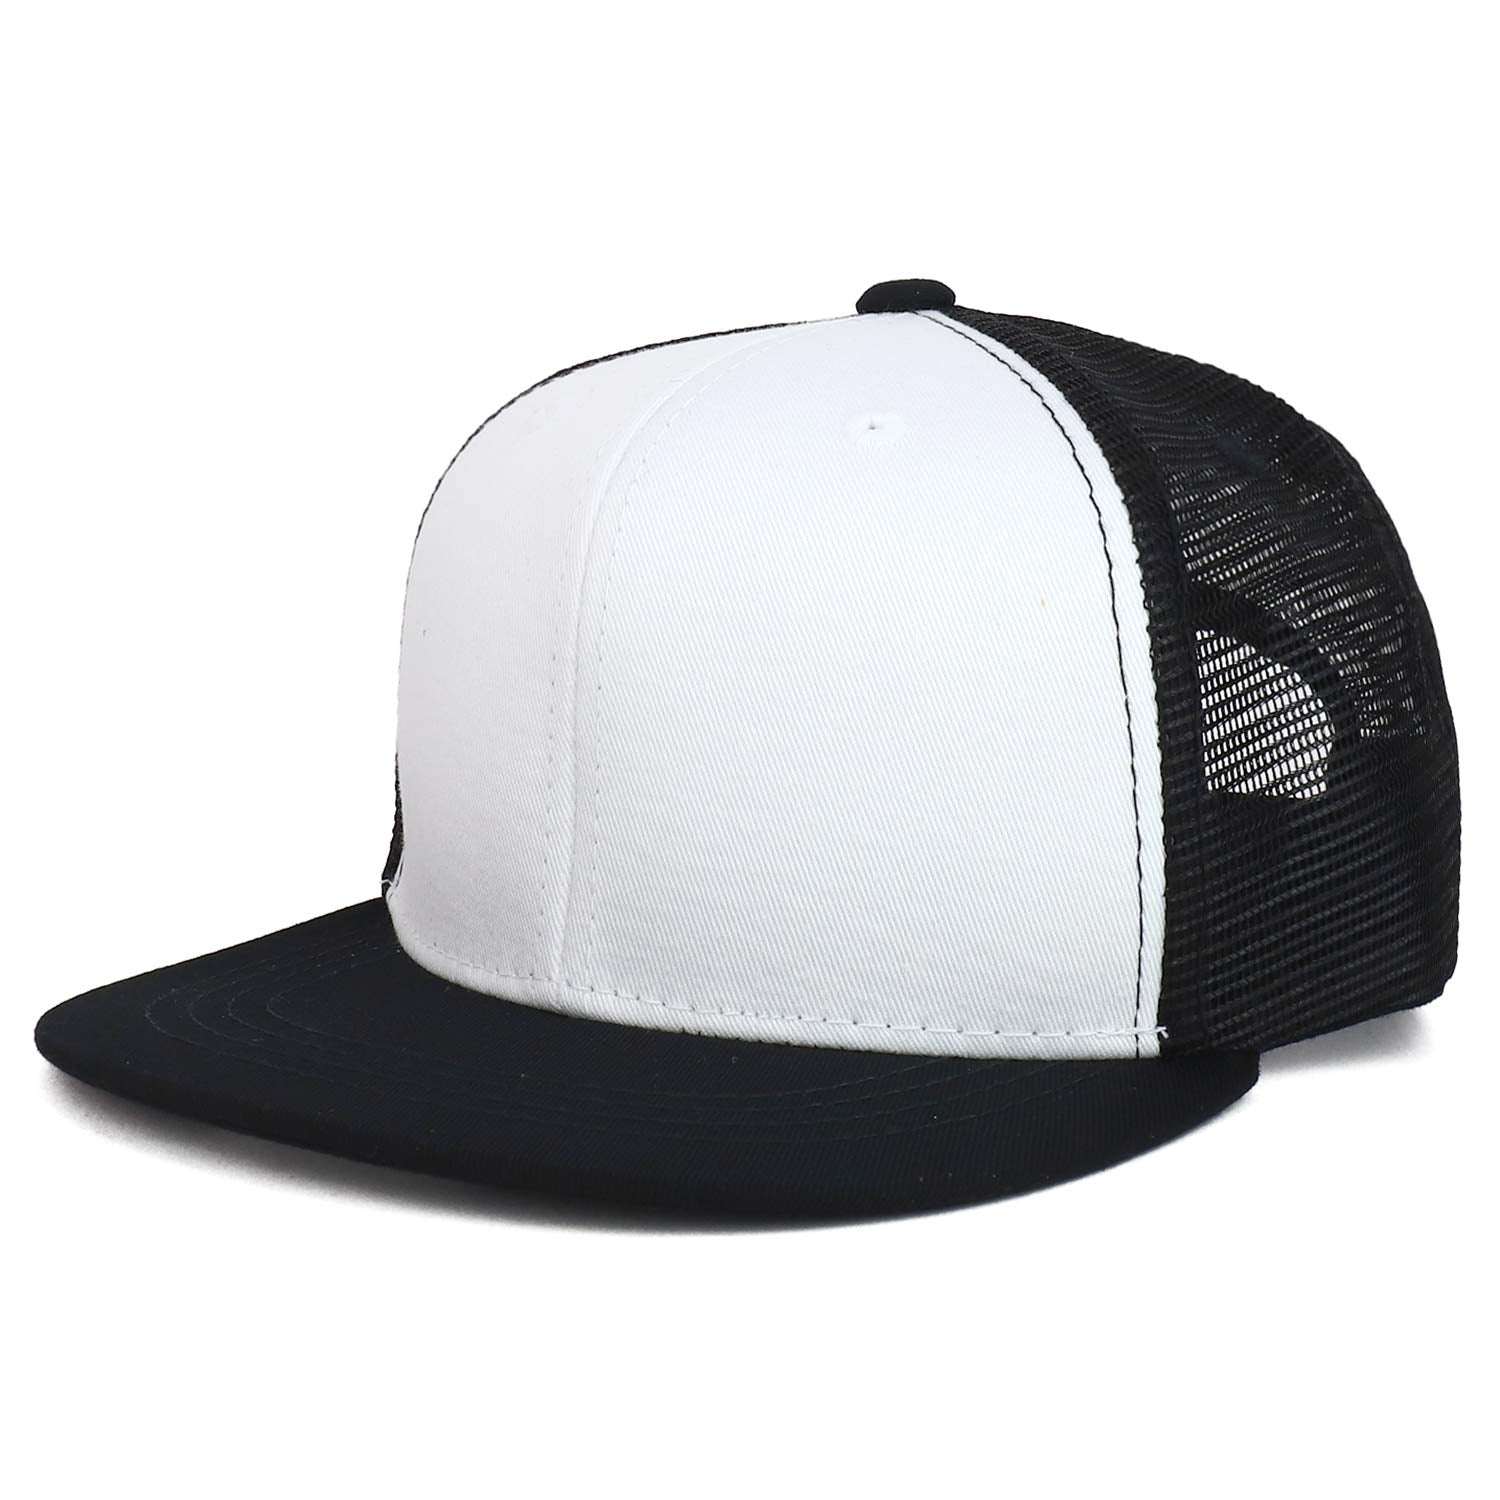 Manhattanville College Hats for Men Flat Bill Fitted Caps Hiphop Rap  Adjustable Baseball Trucker Dad Hat 